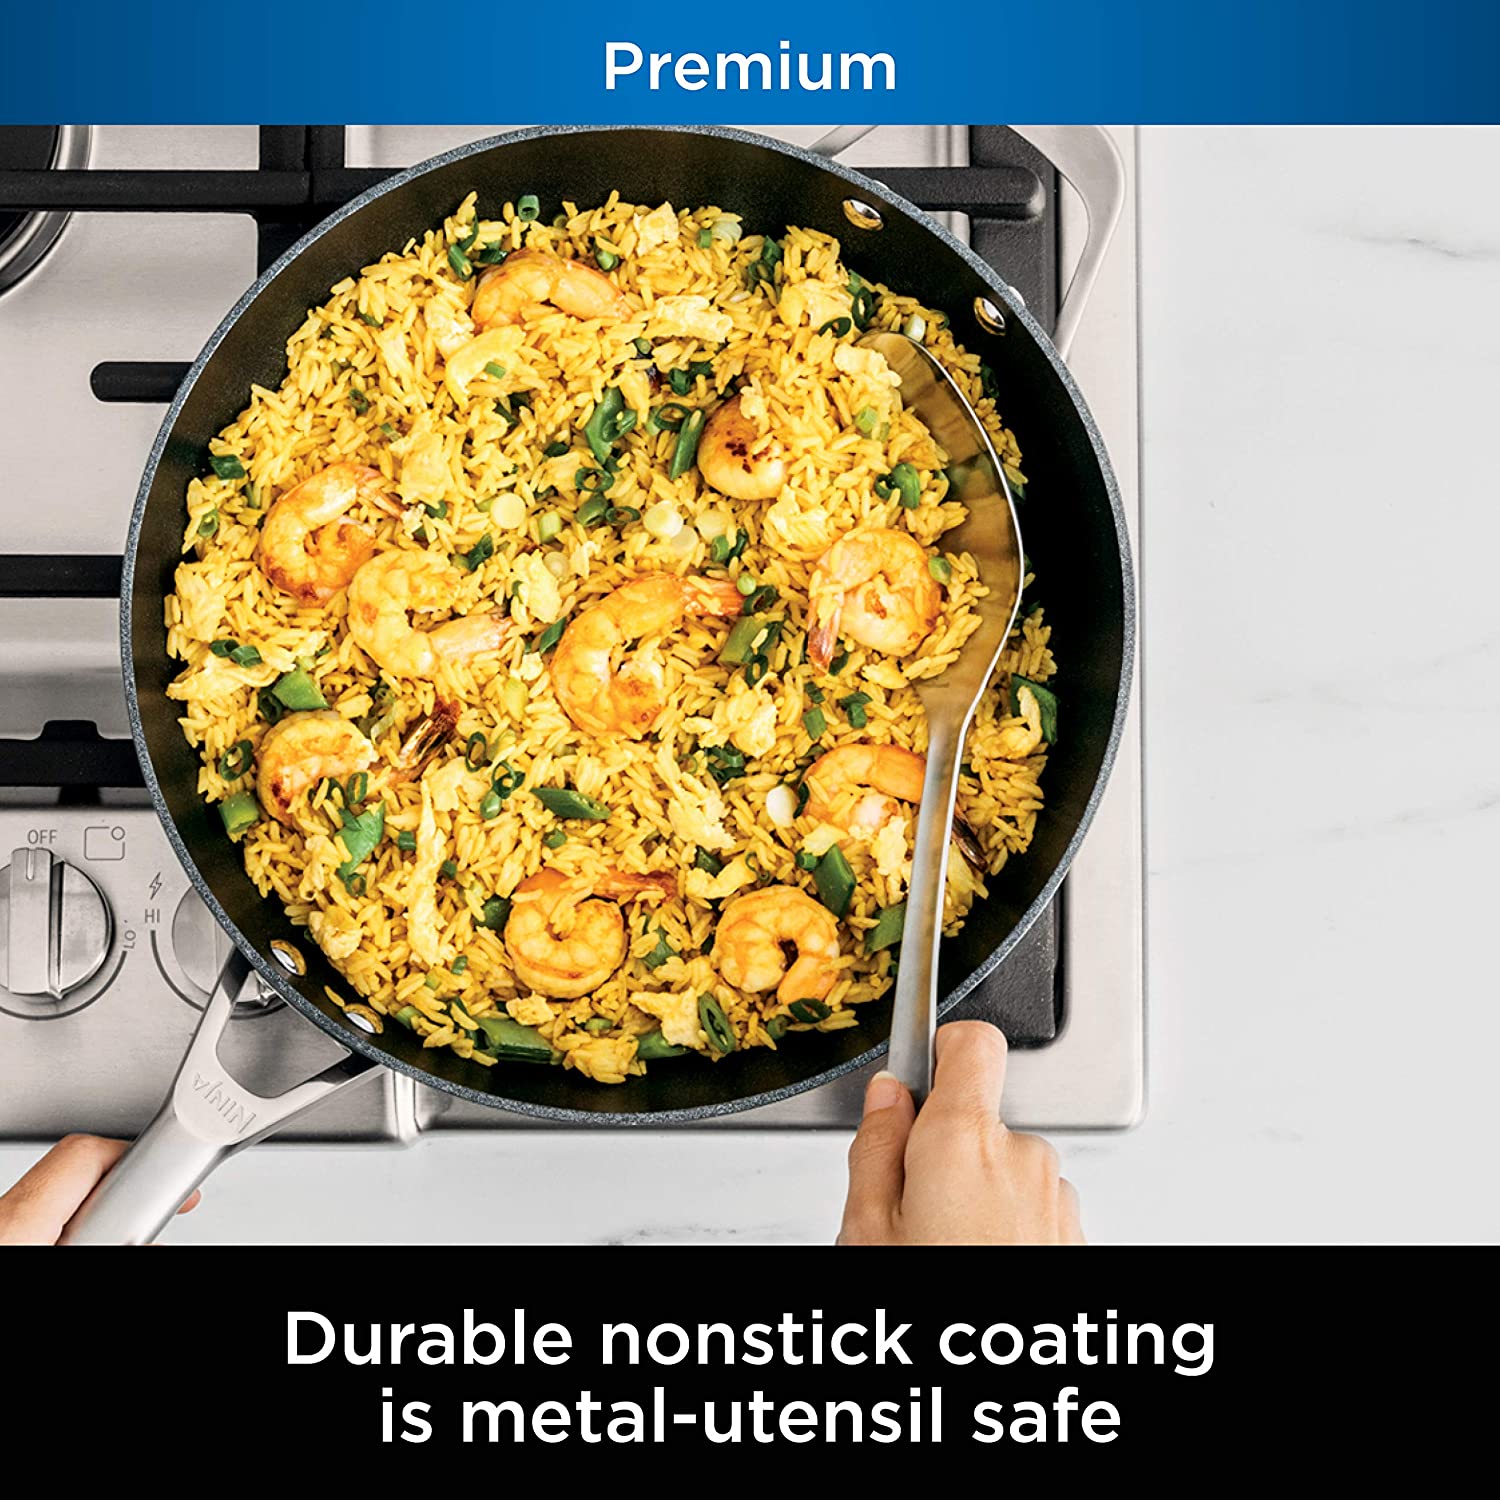 Ninja NeverStick Premium Hard-Anodized 10 Piece Pots & Pans Set, Nonstick  Cookware Set, Durable, Oven Safe to 500°F, Slate Grey, C39500